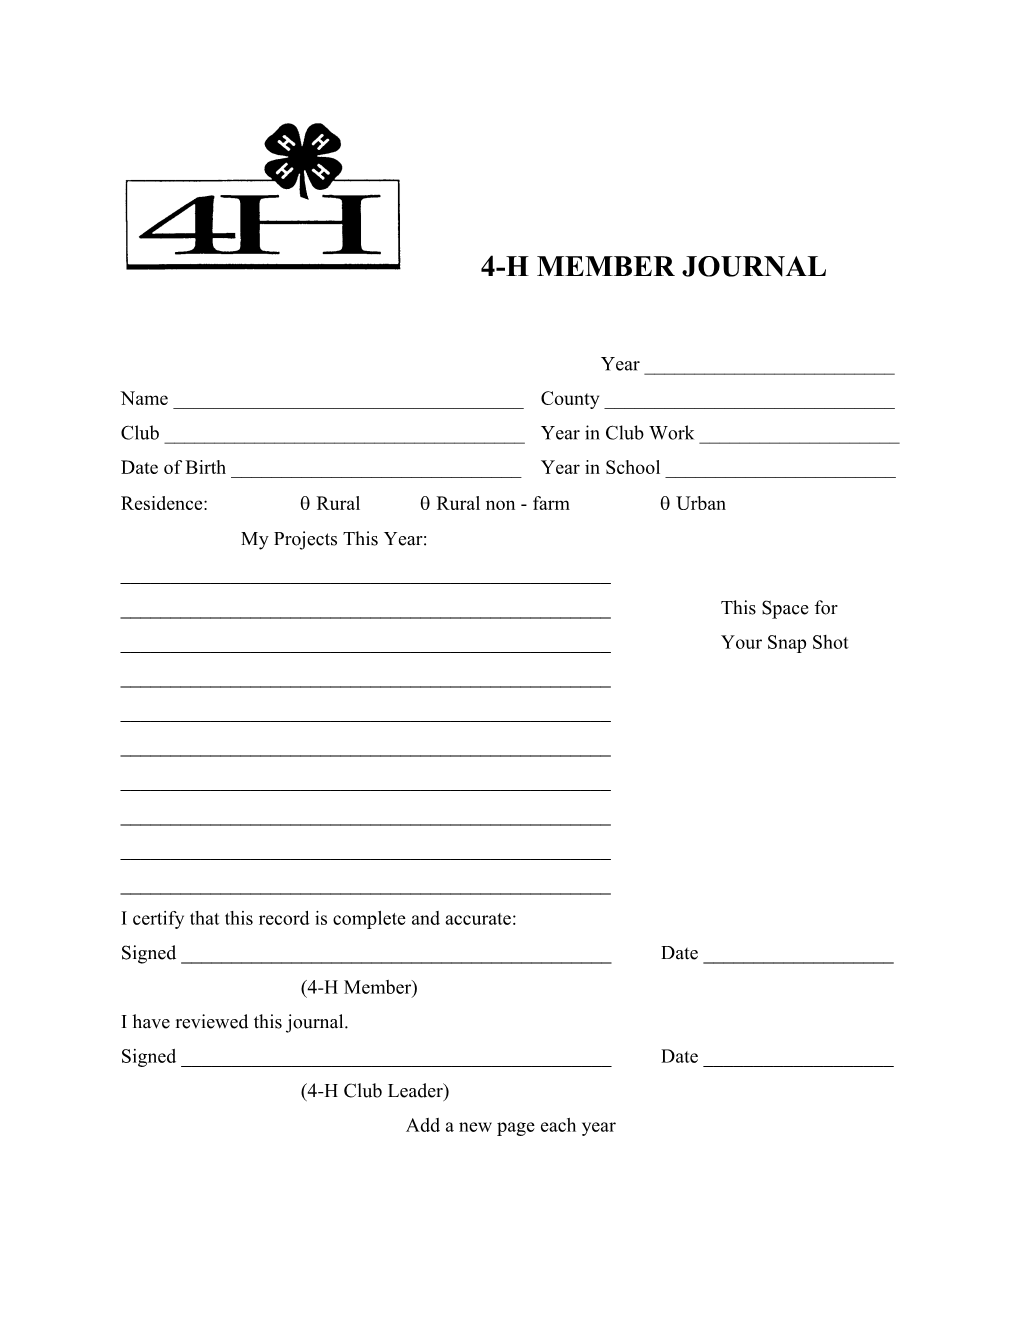 4-H Member Journal